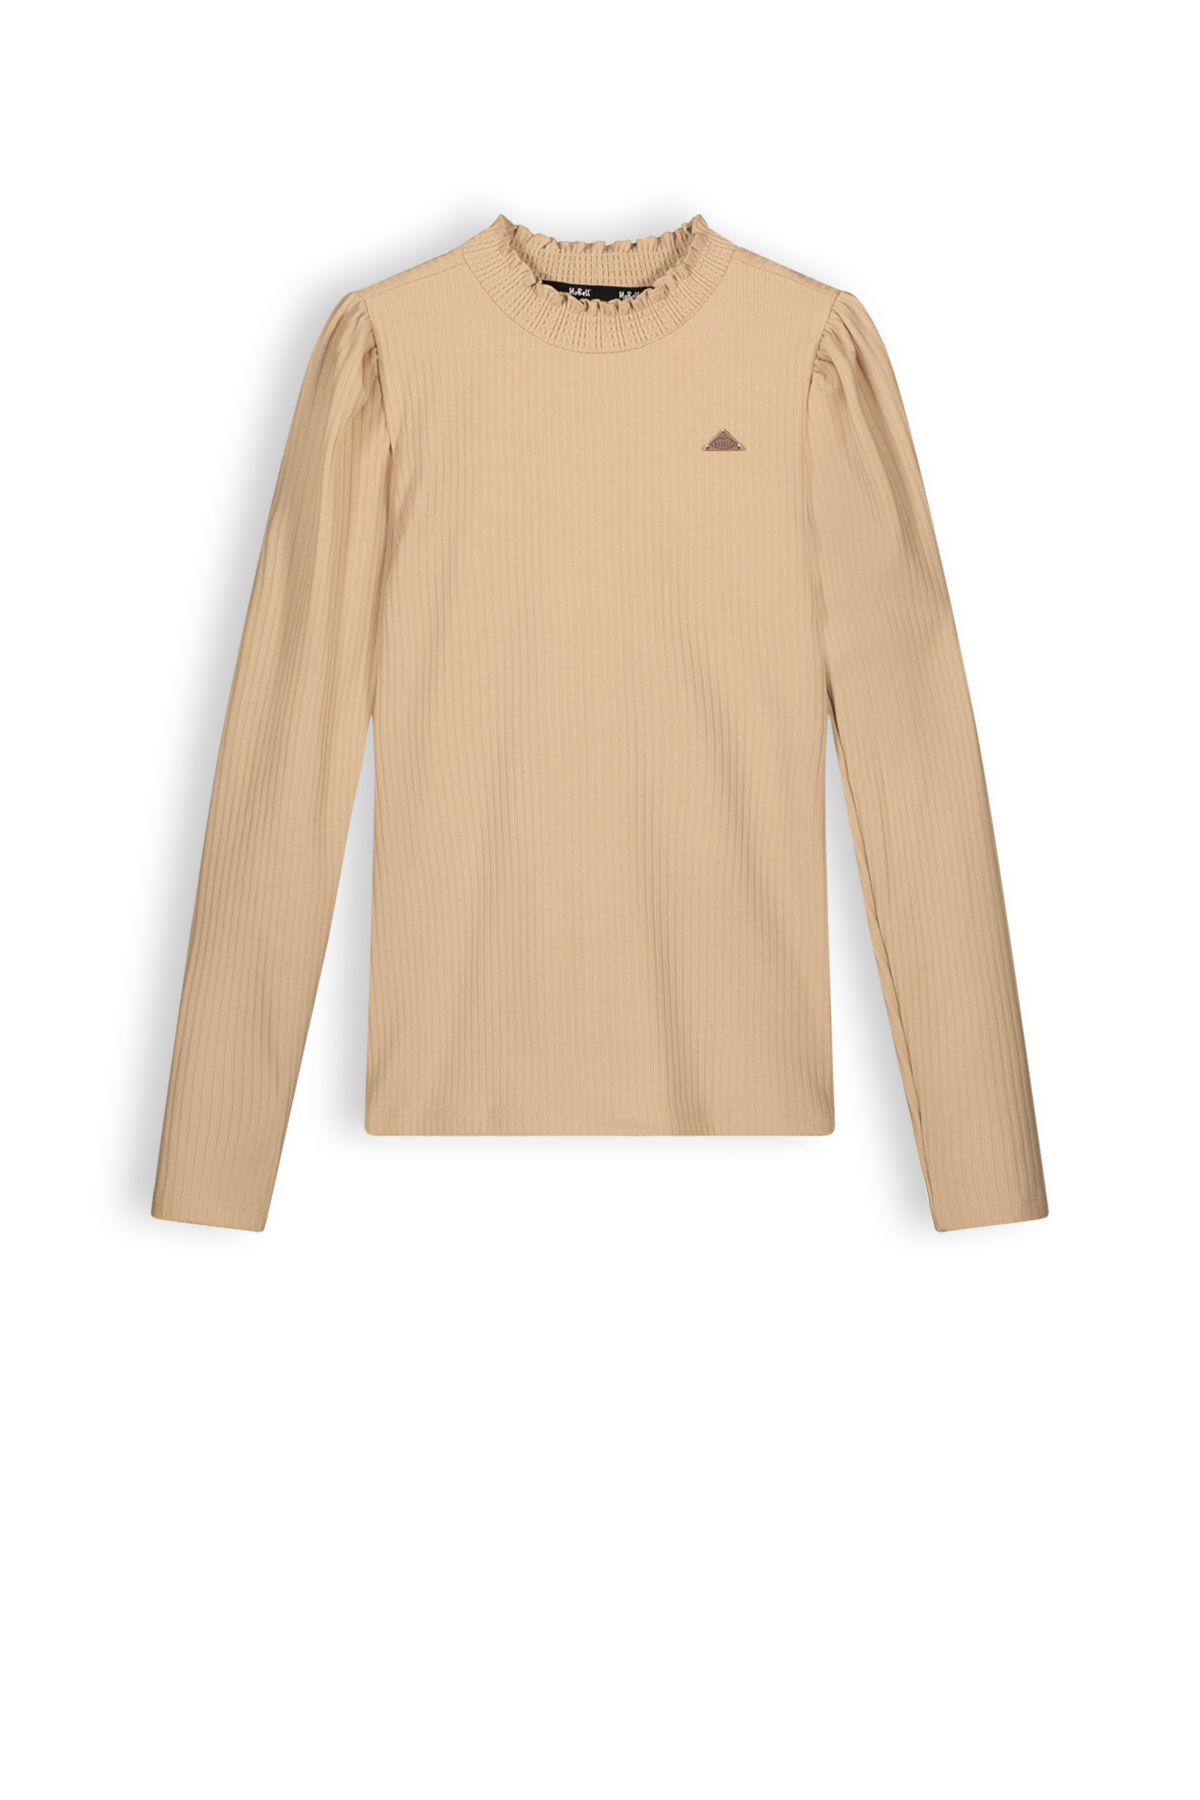 Meisjes shirt soft rib jersey - Kobus - Beige